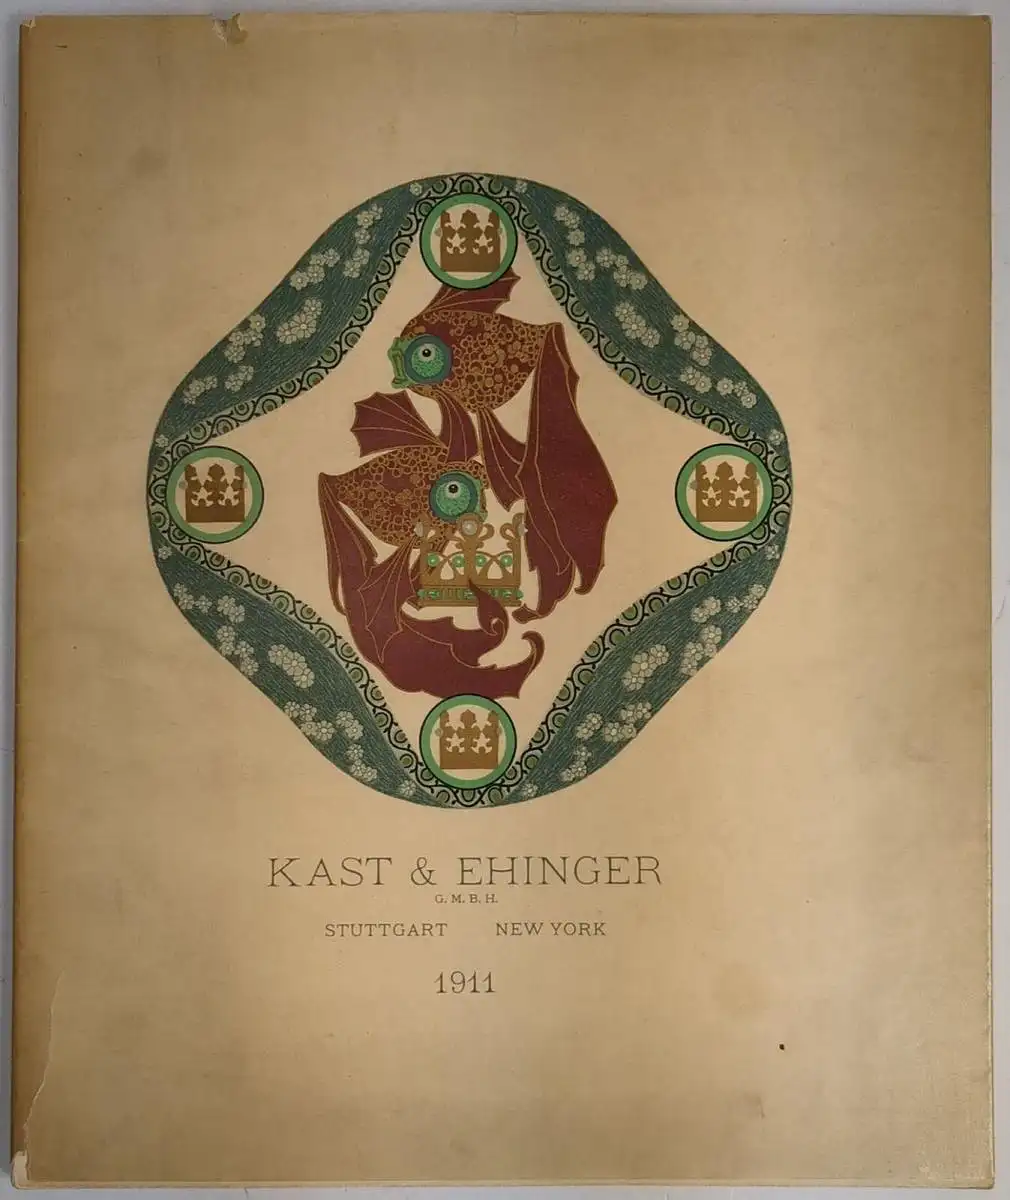 Buch: Andersen Kalender 1911, Märchen, Hugo Salus, H. Lefler, J. Urban, M. Munk